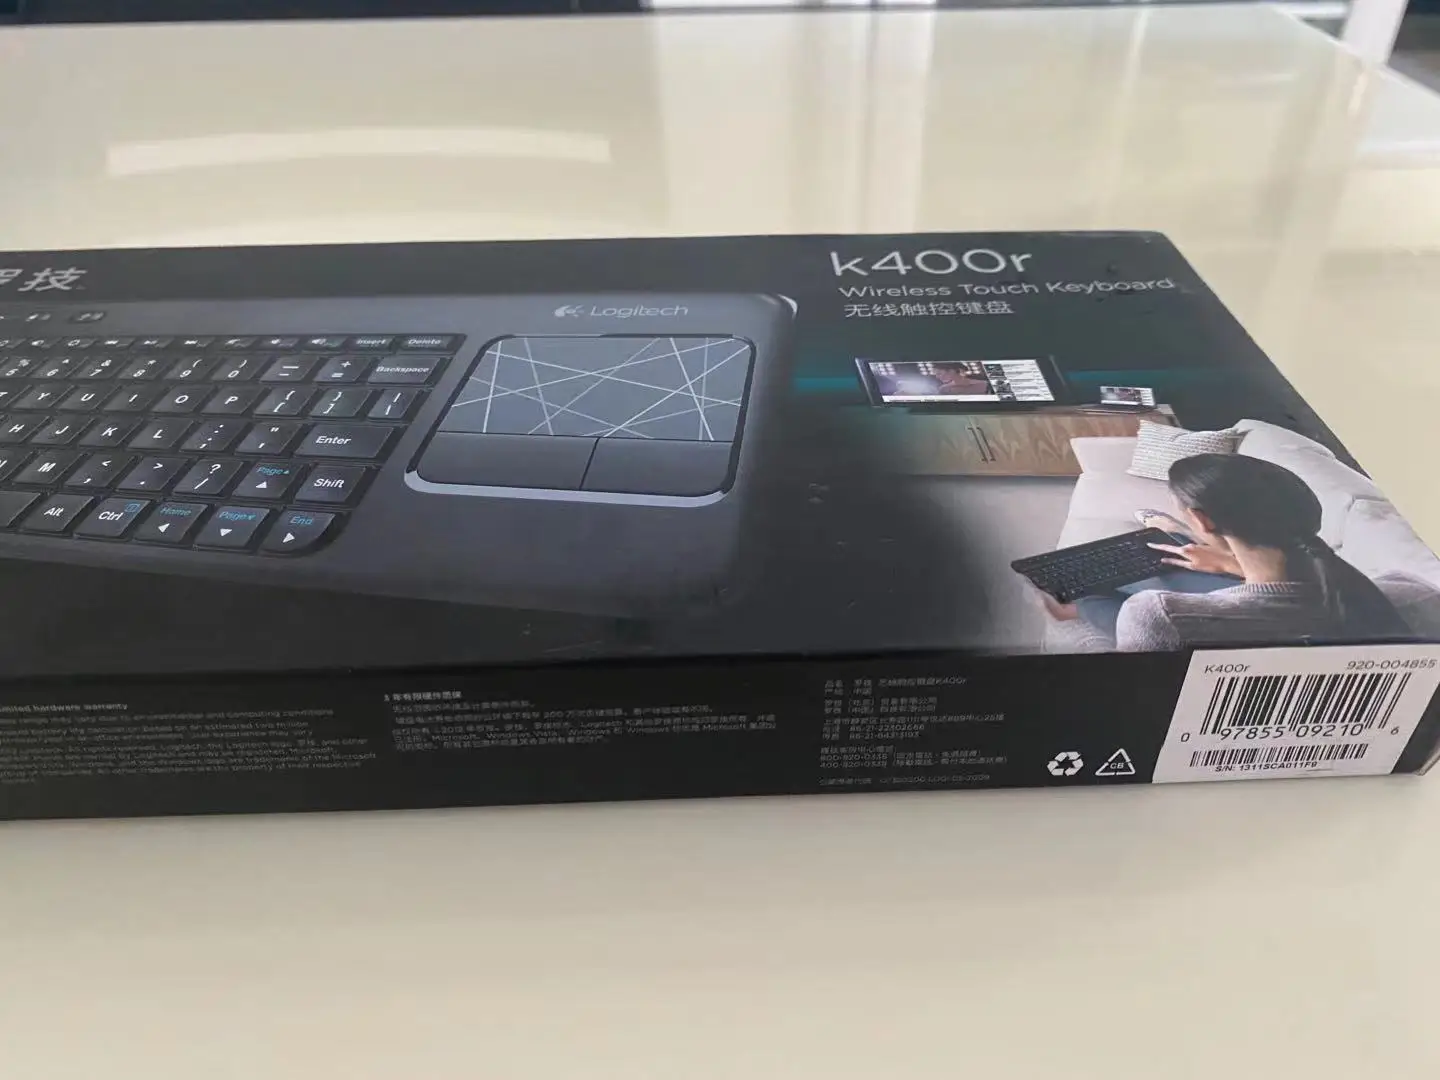 aIDS binde Bryde igennem The New Classic Logitech K400r Usb Wireless Touch Keyboard Keypad -  Keyboards - AliExpress